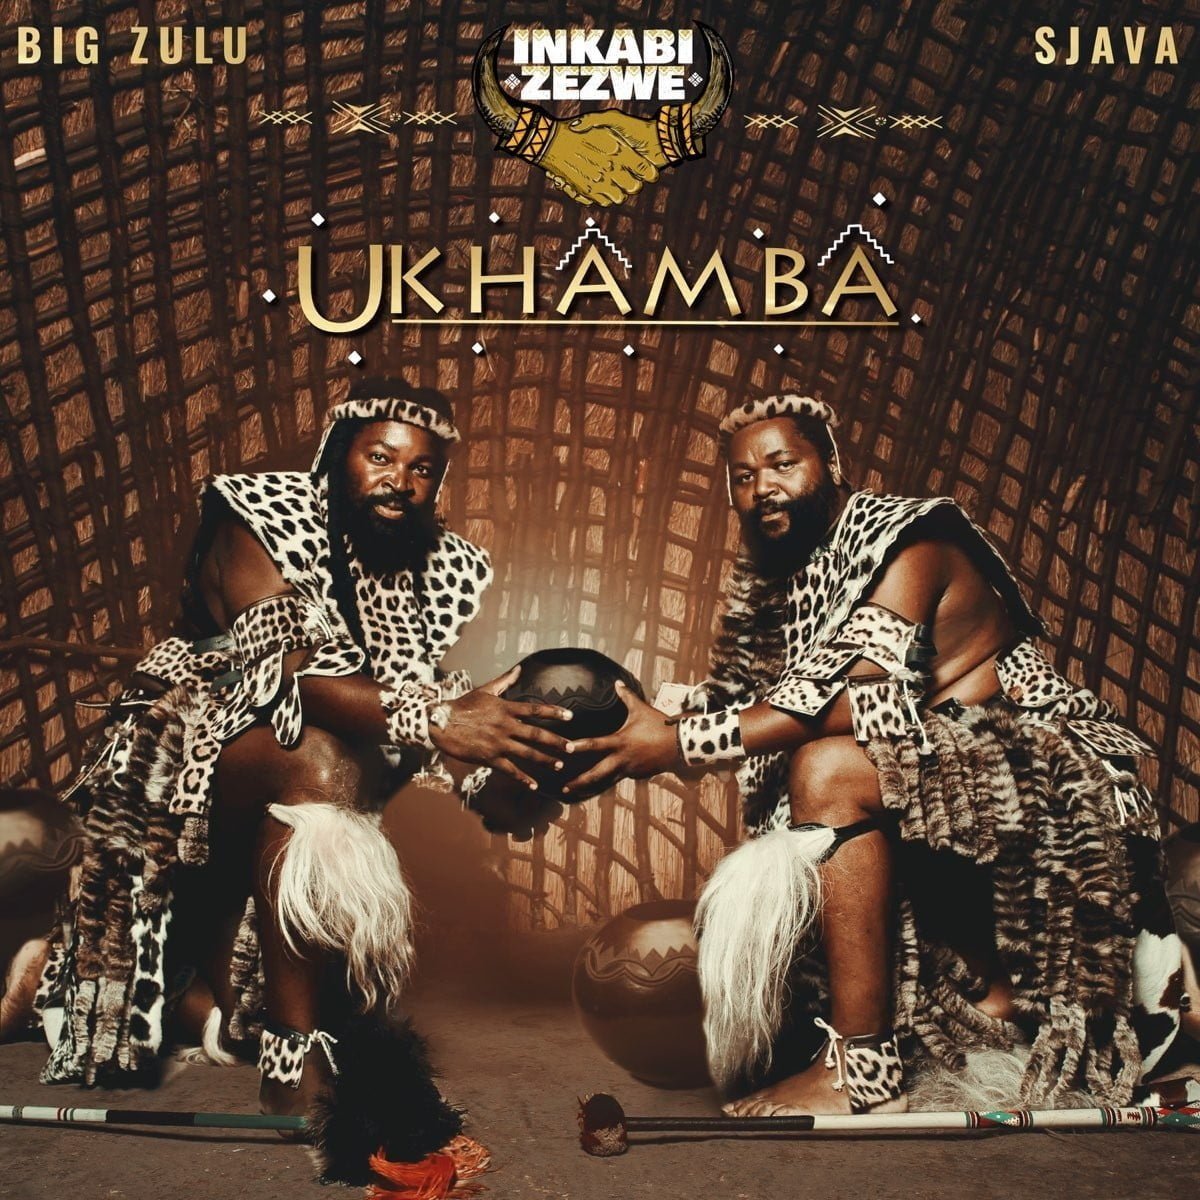 Inkabi Zezwe, Sjava & Big Zulu - Intro mp3 download free lyrics